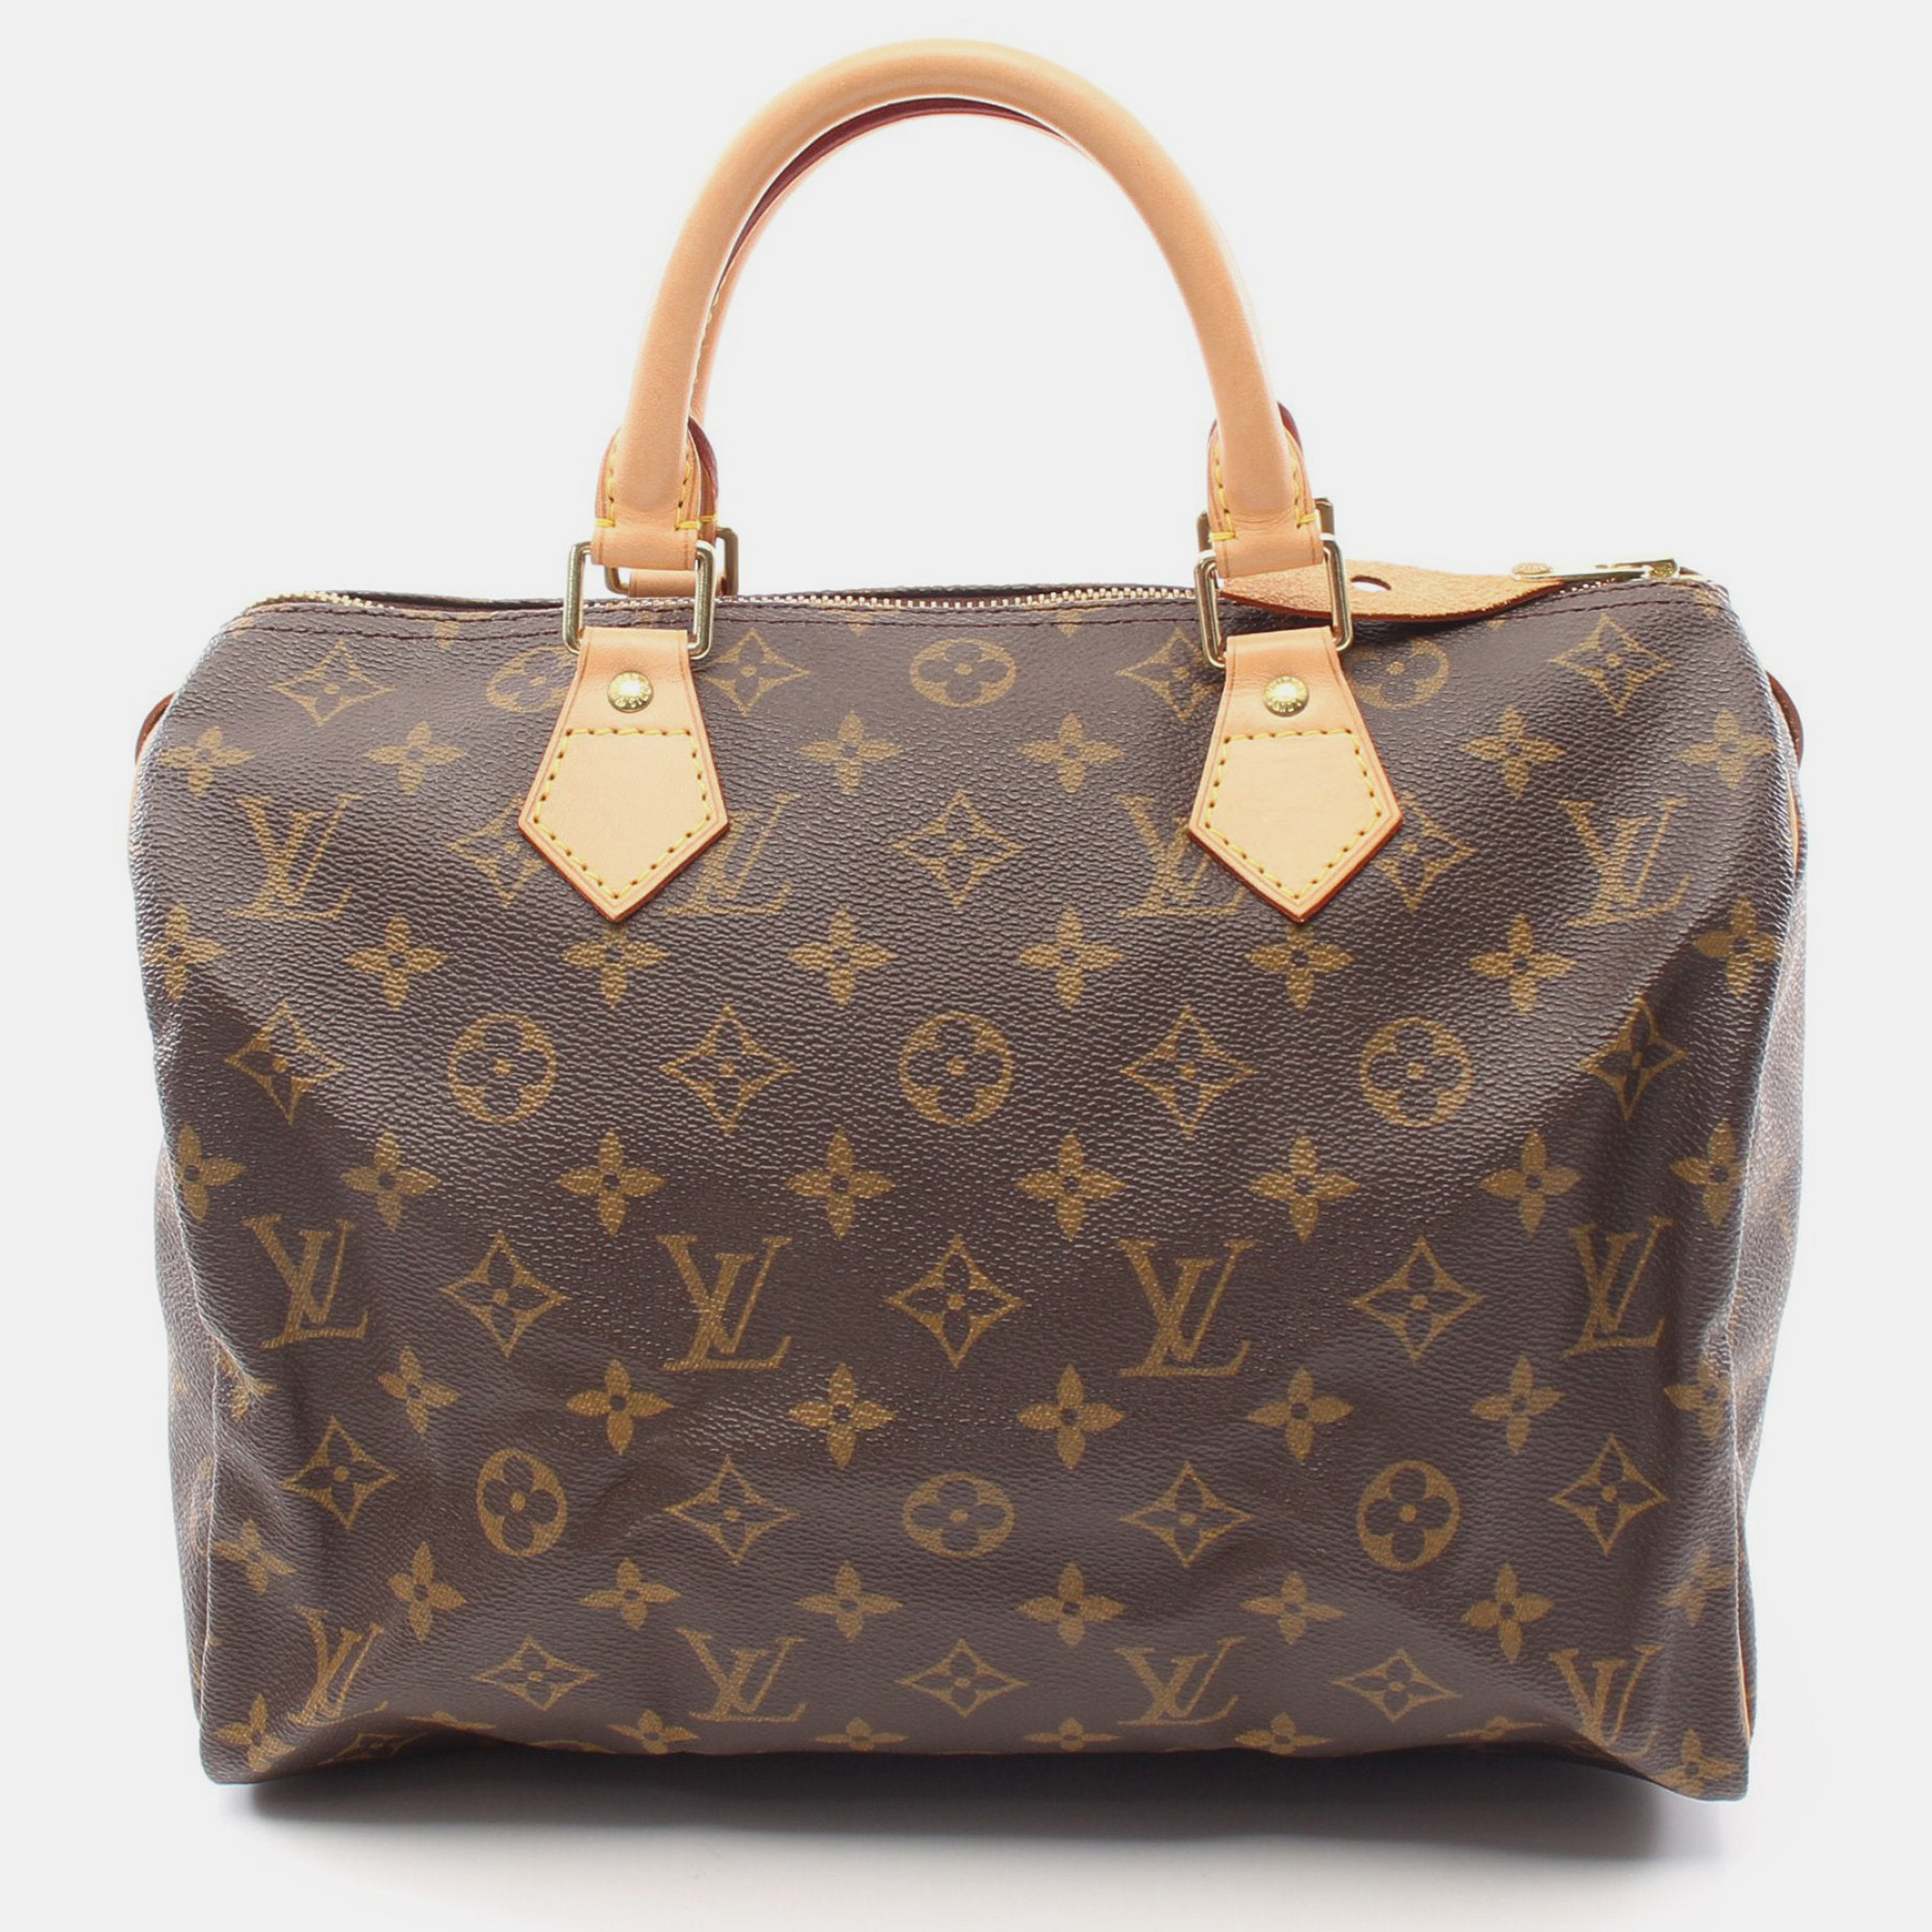 Louis vuitton speedy 30 monogram handbag pvc leather brown